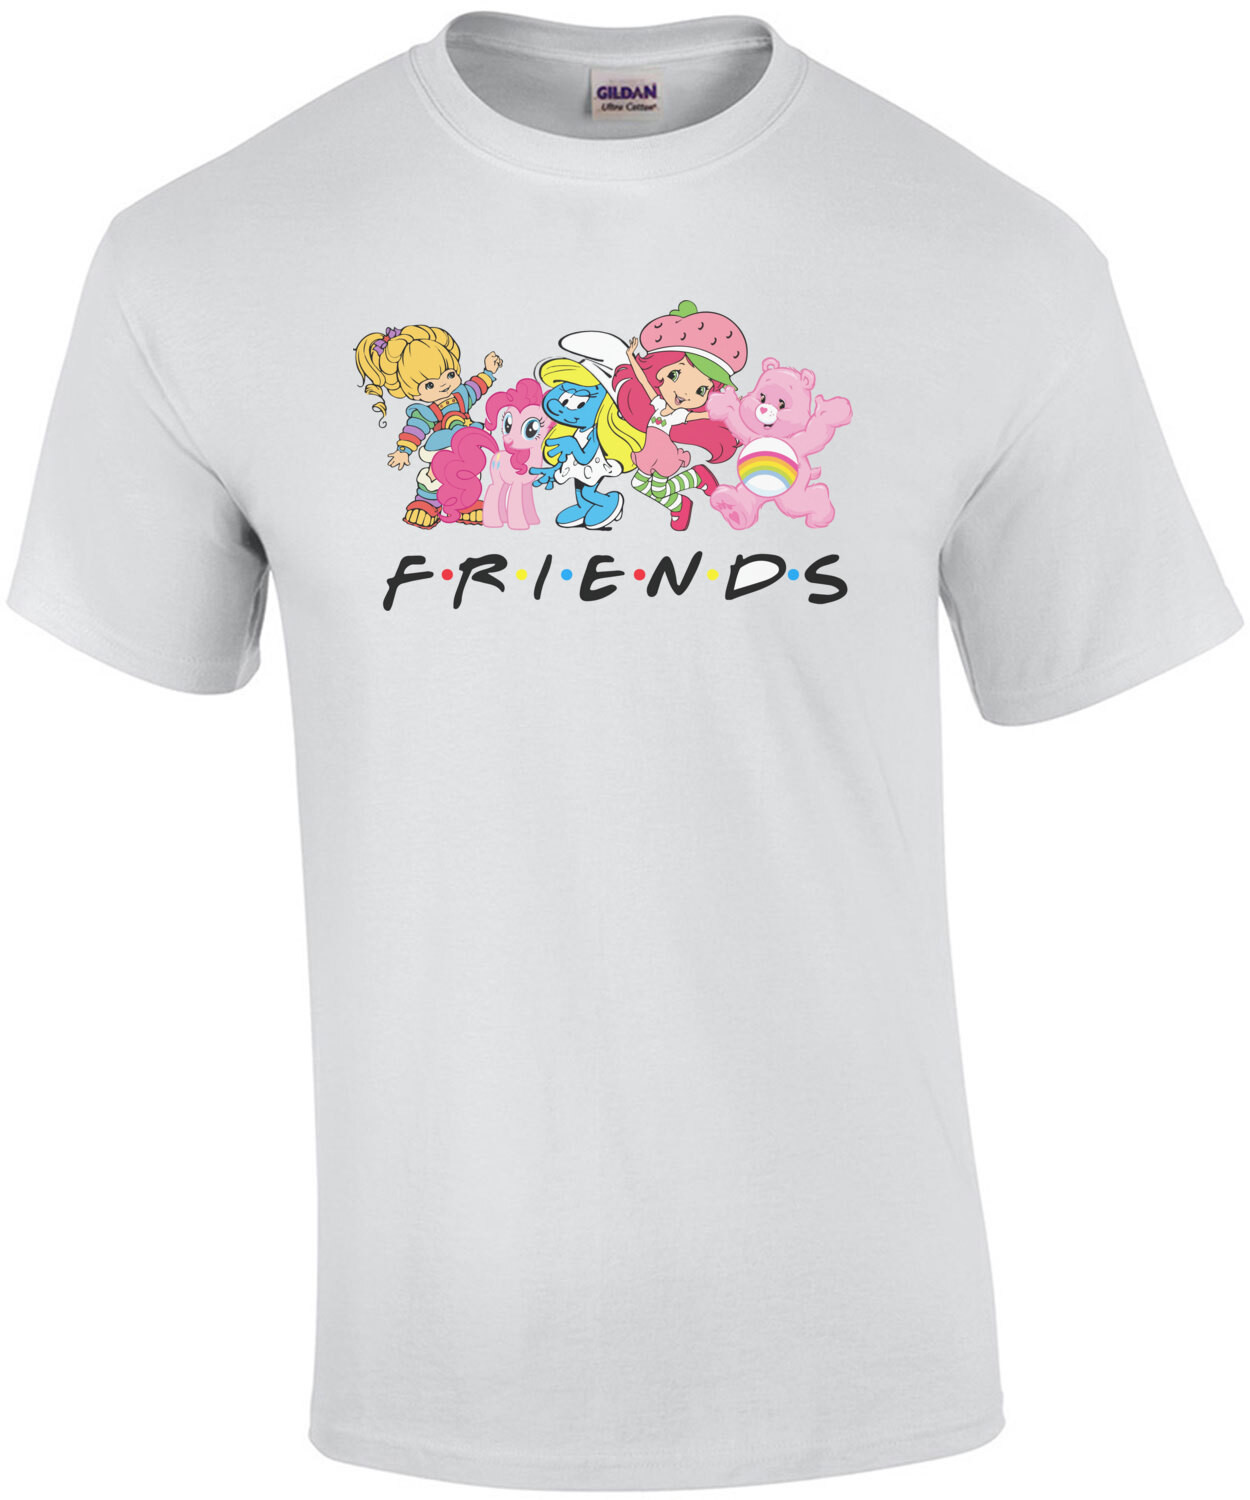 Friends - Rainbow Brite - My Little Pony - Smurfette - Strawberry Shortcake - Carebear - 80s, 90's T-Shirt